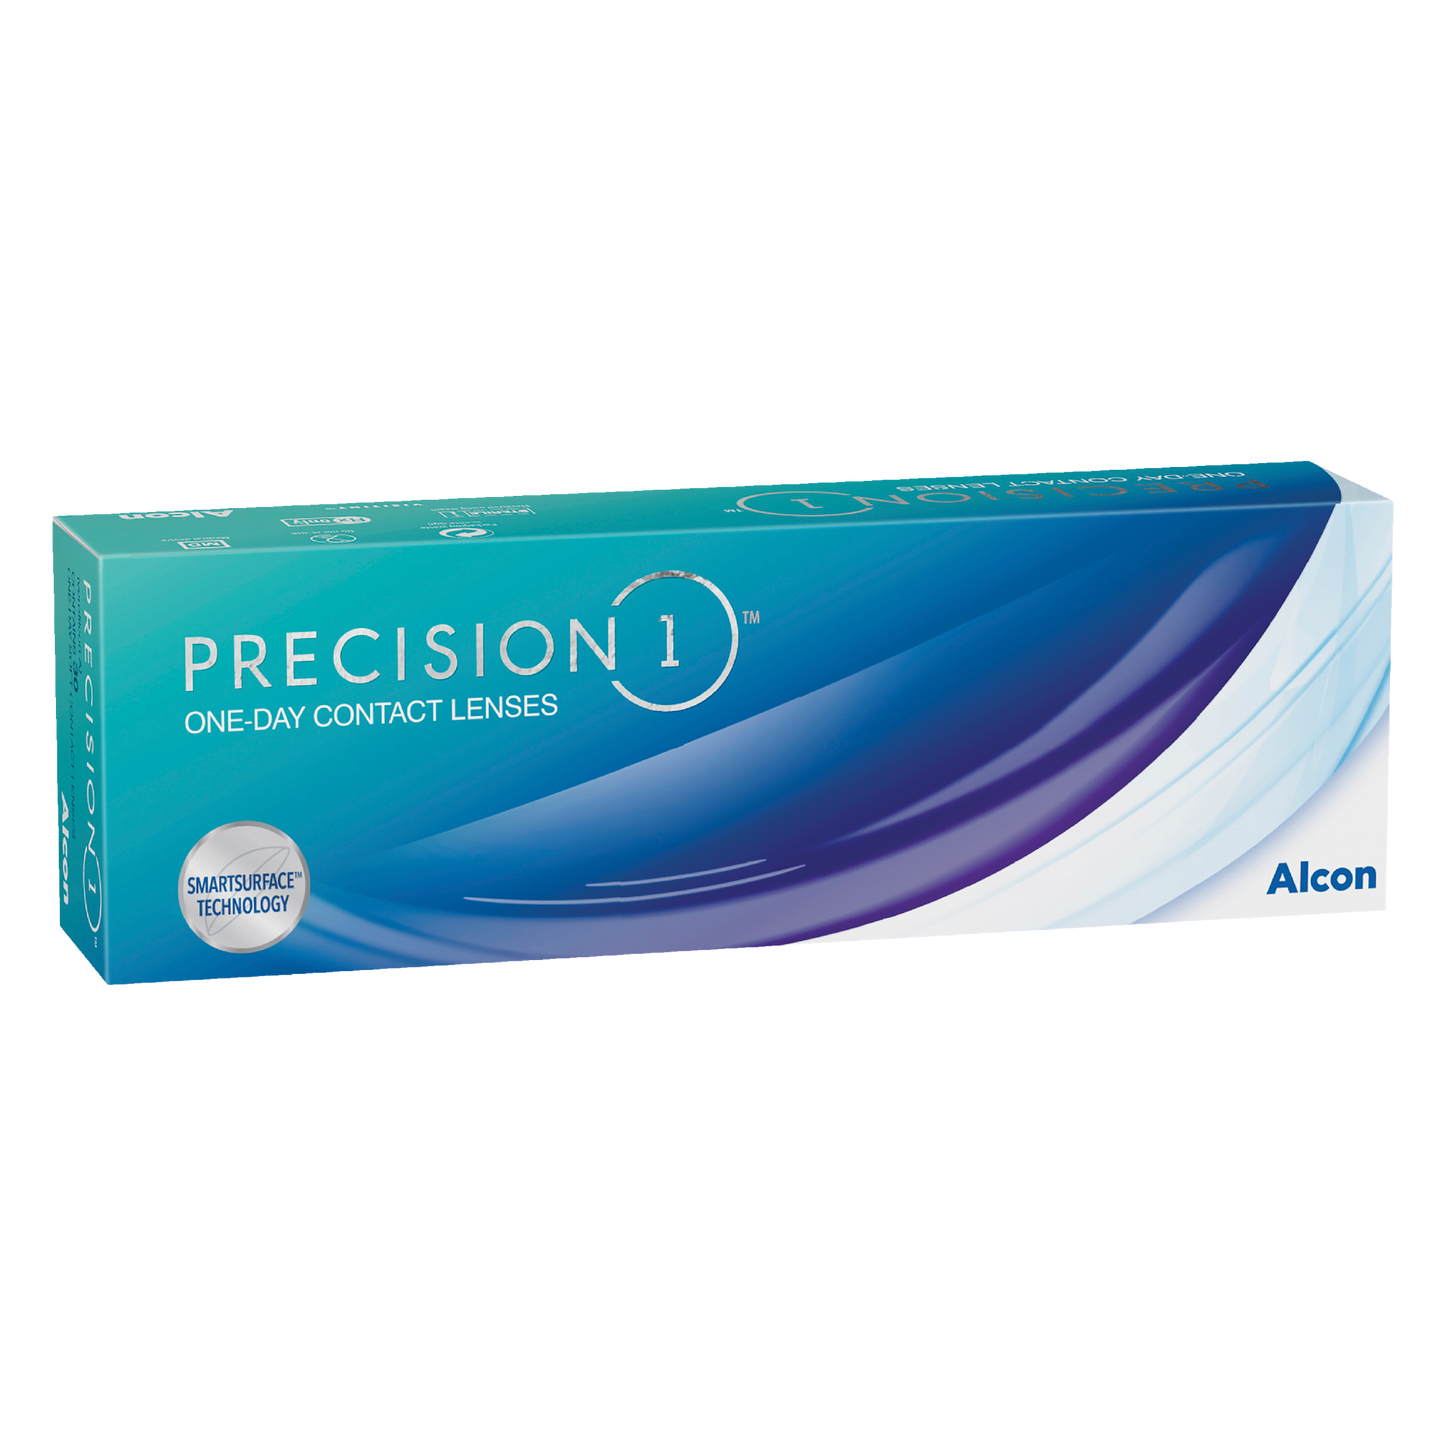 Box of Precision1 contact lenses